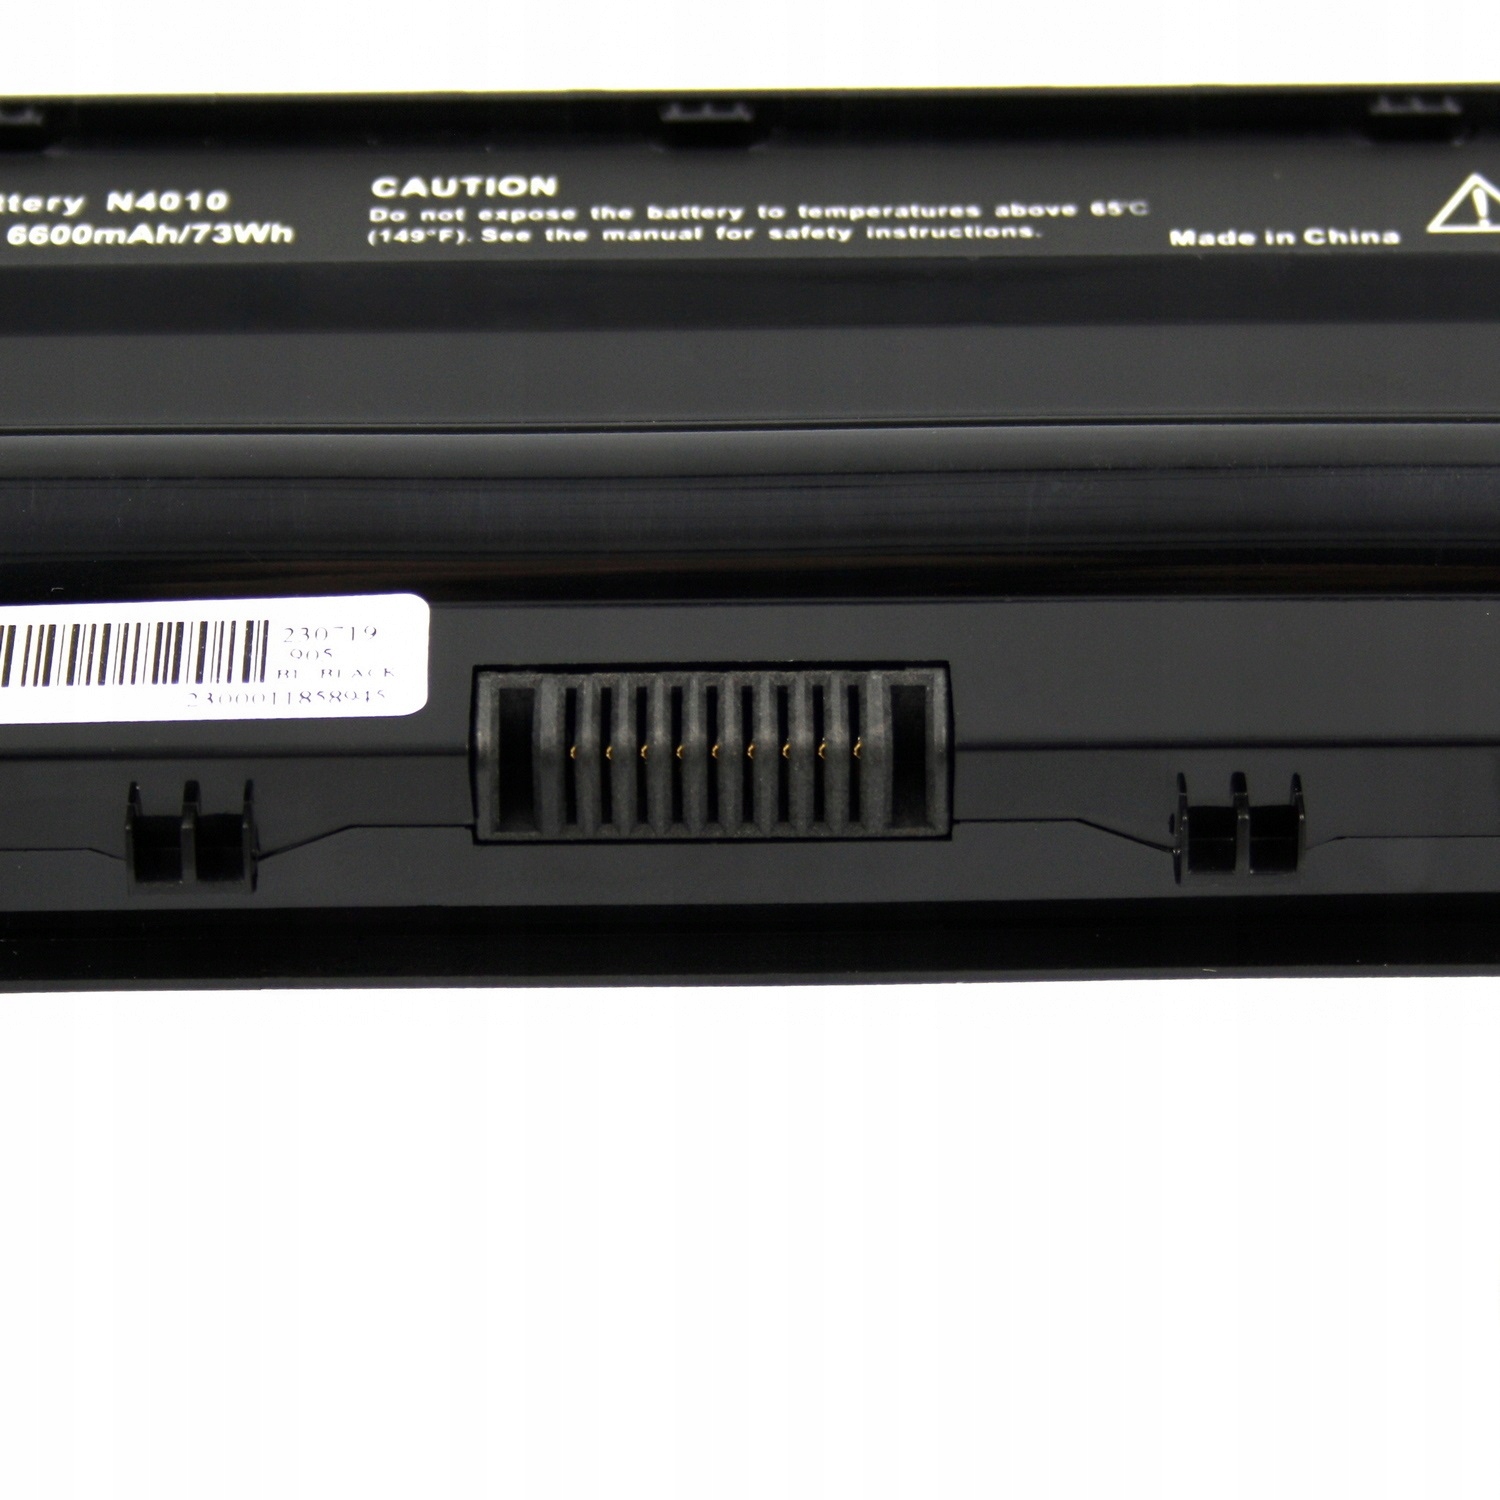 BATERIA AKUMULATOR DELL N5010 N5030 N5050 N5110 N7110 J1KND - Baterie do laptopów